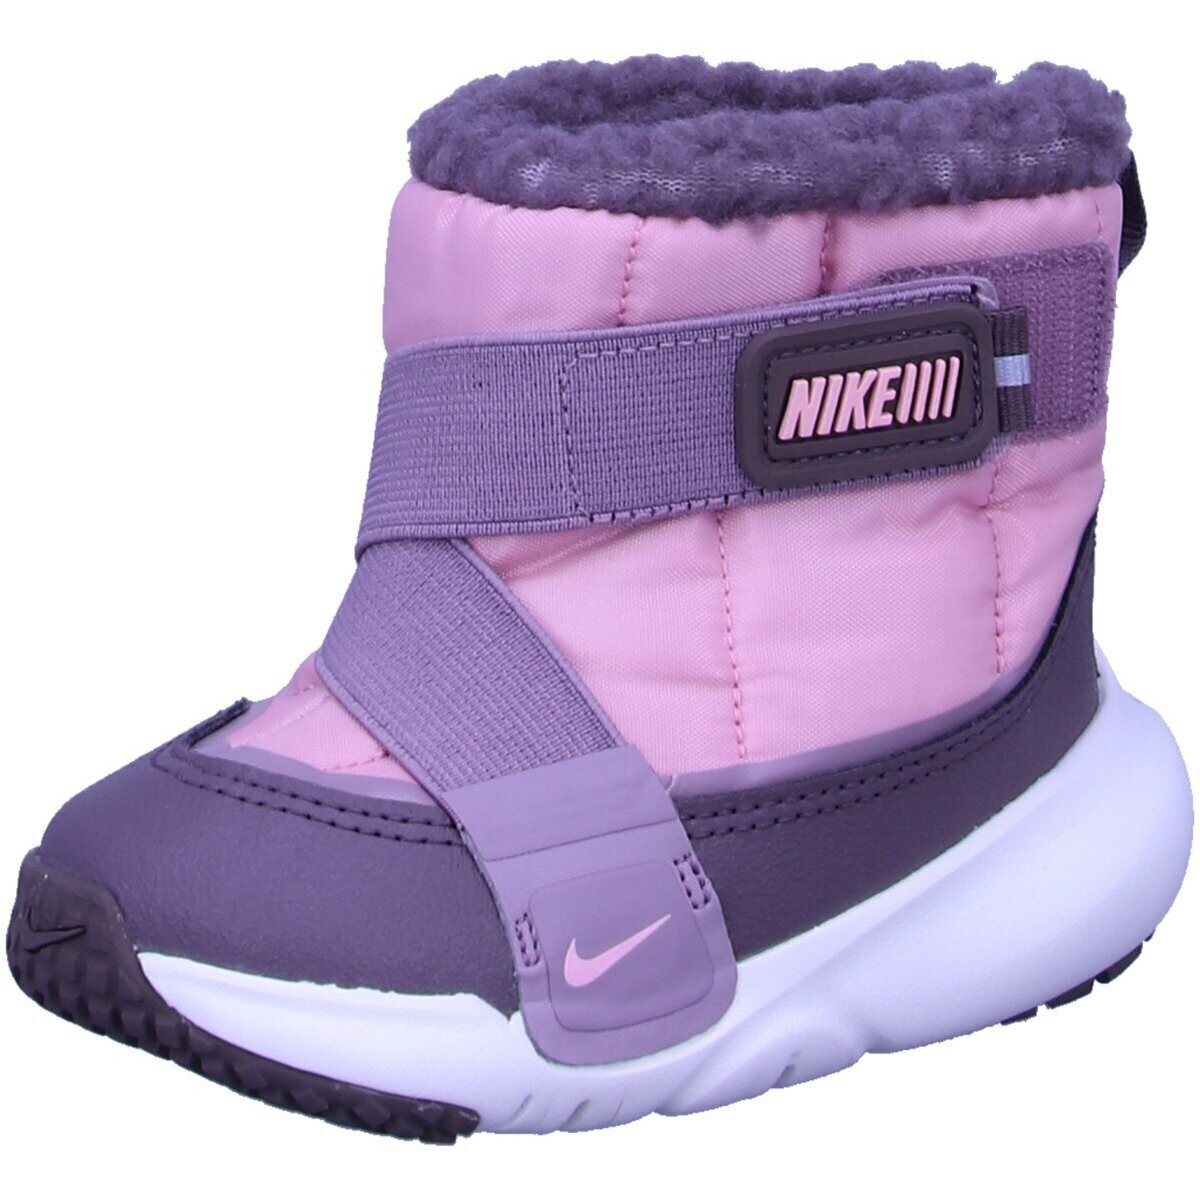 Nike Violet kZzXLa1J